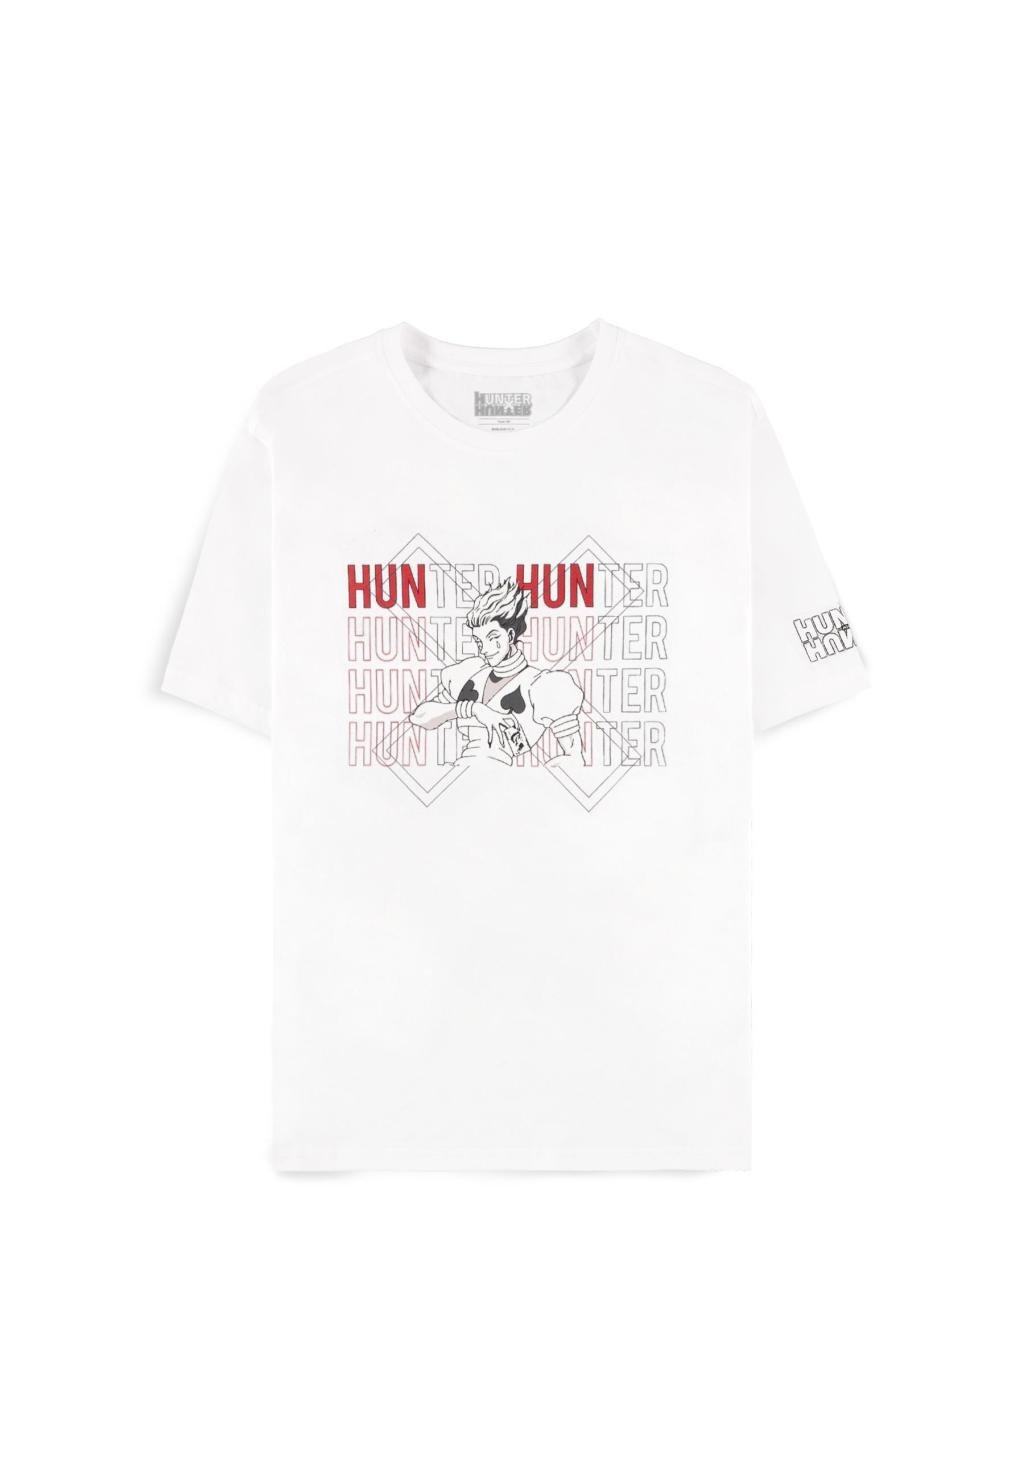 HUNTER X HUNTER - Hisoka - Women's T-shirt (S)